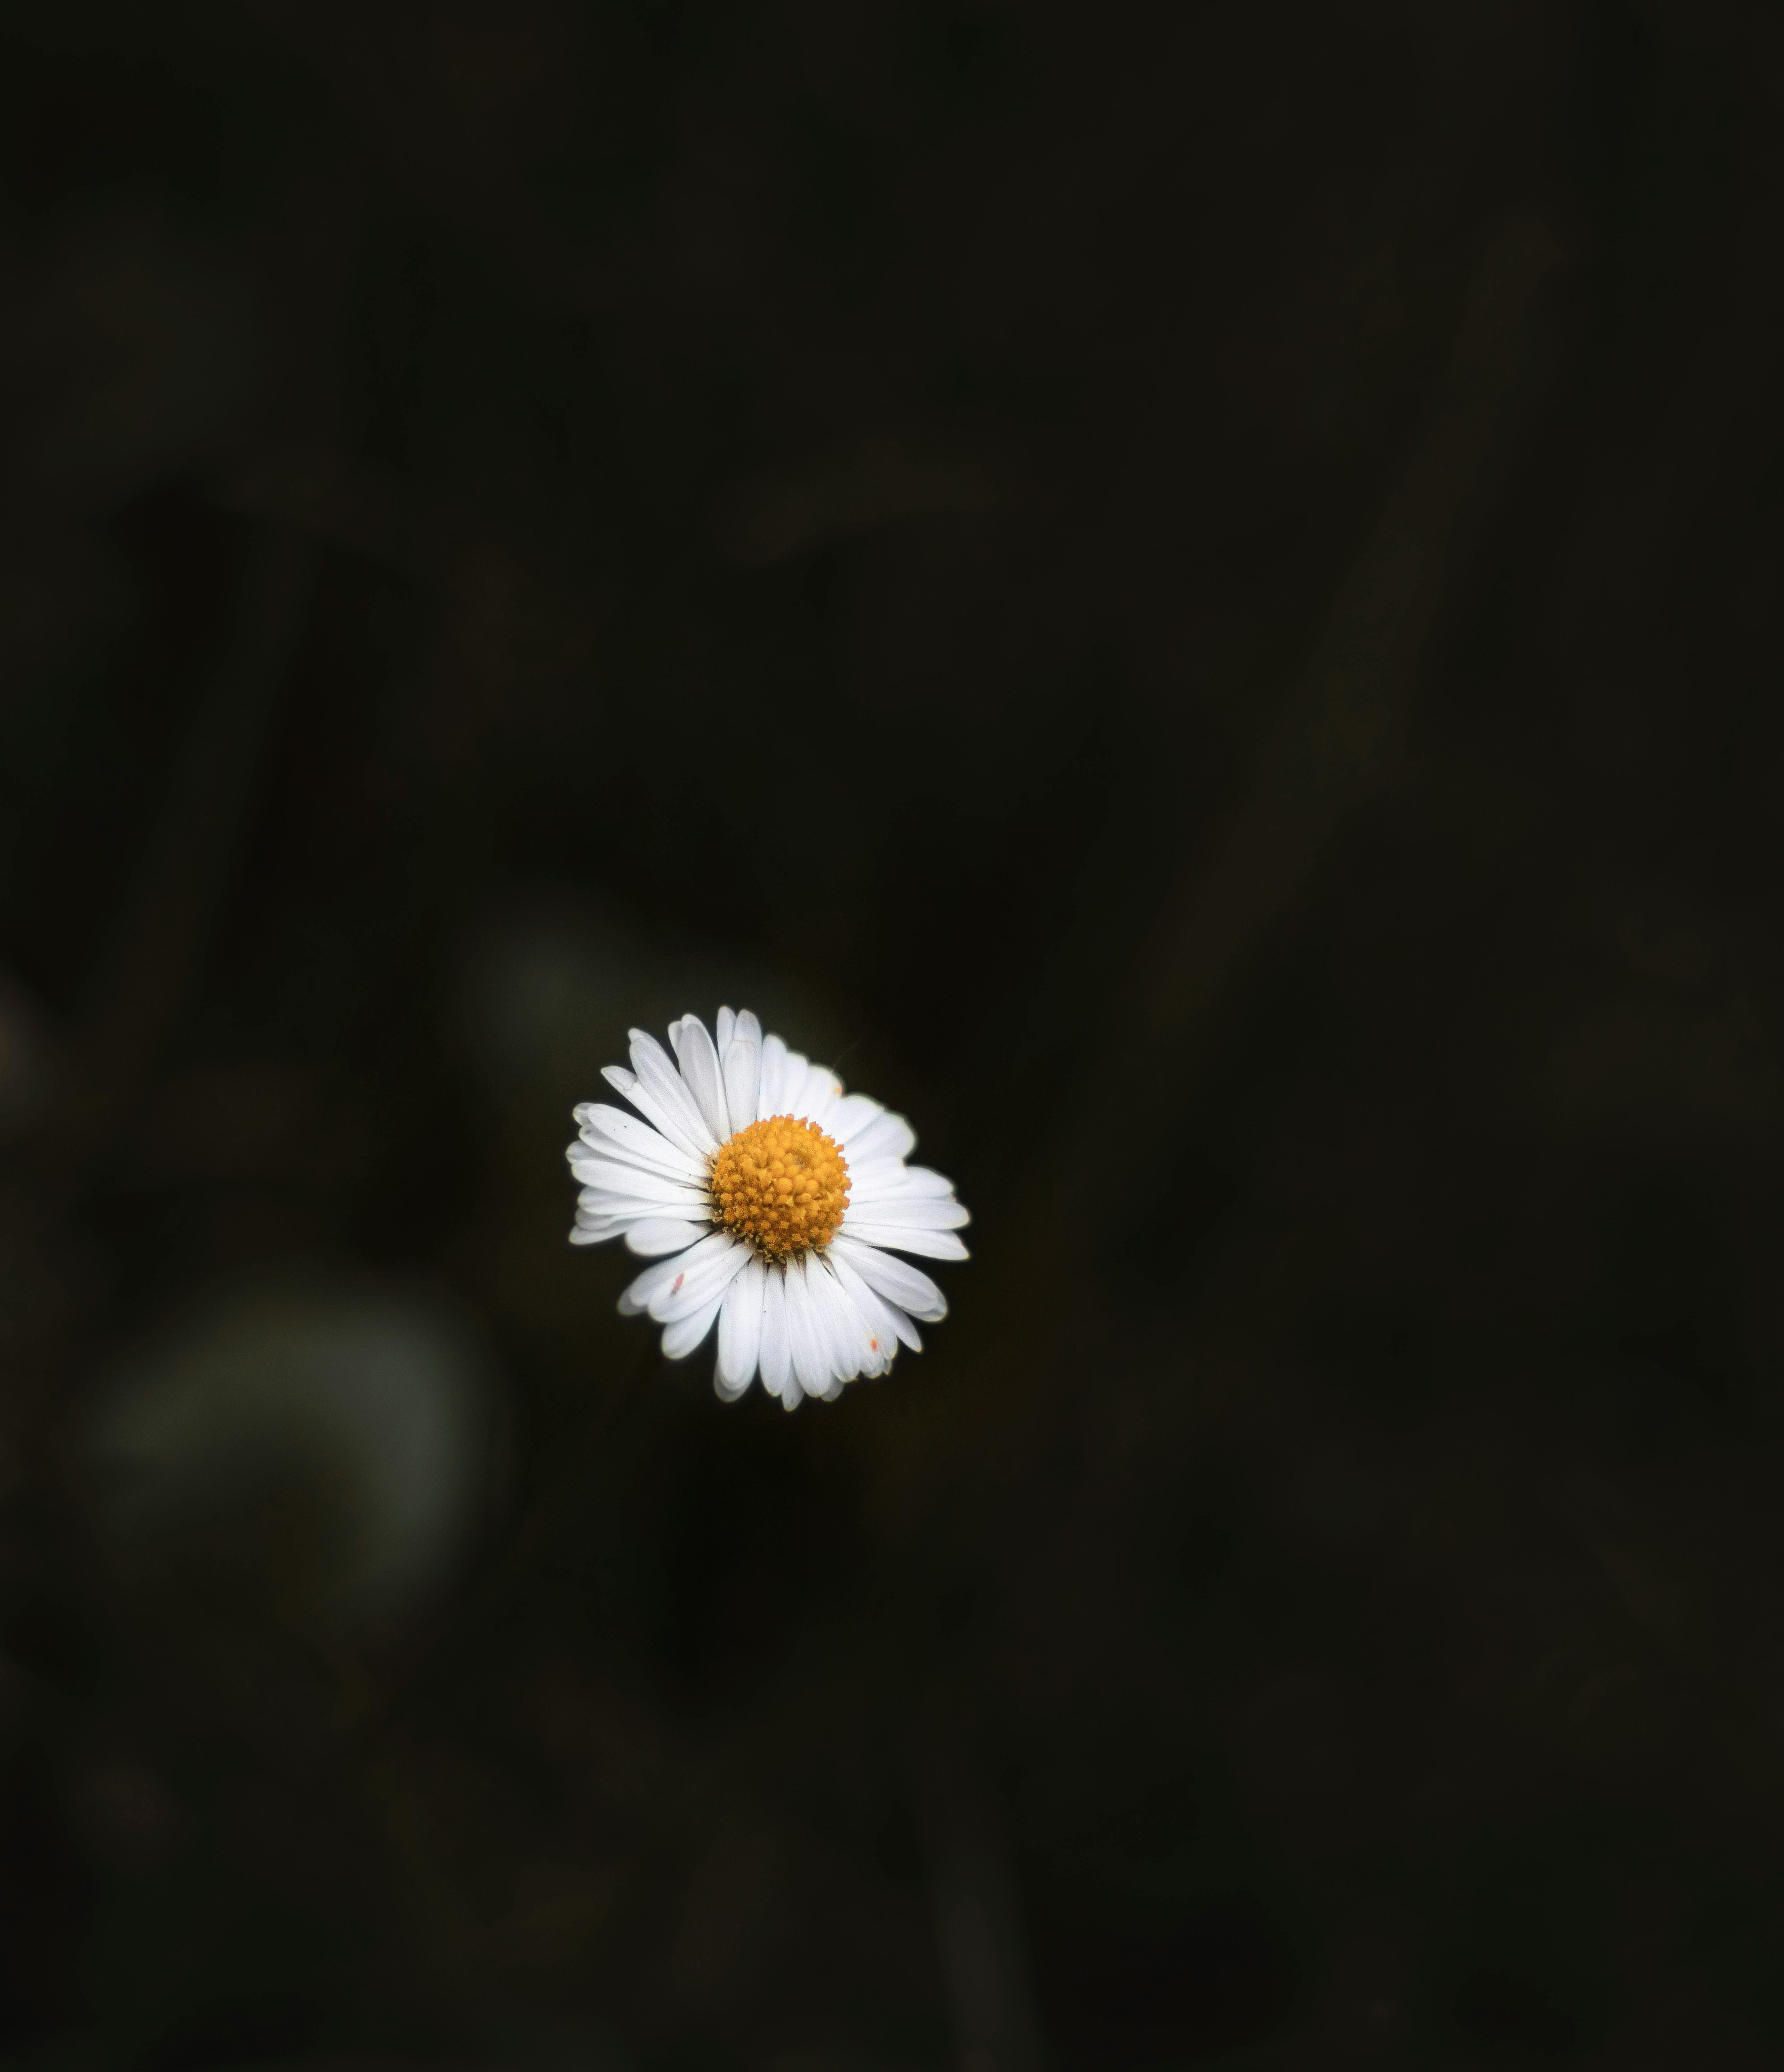 White Daisy Flower in Dark Background · Free Stock Photo